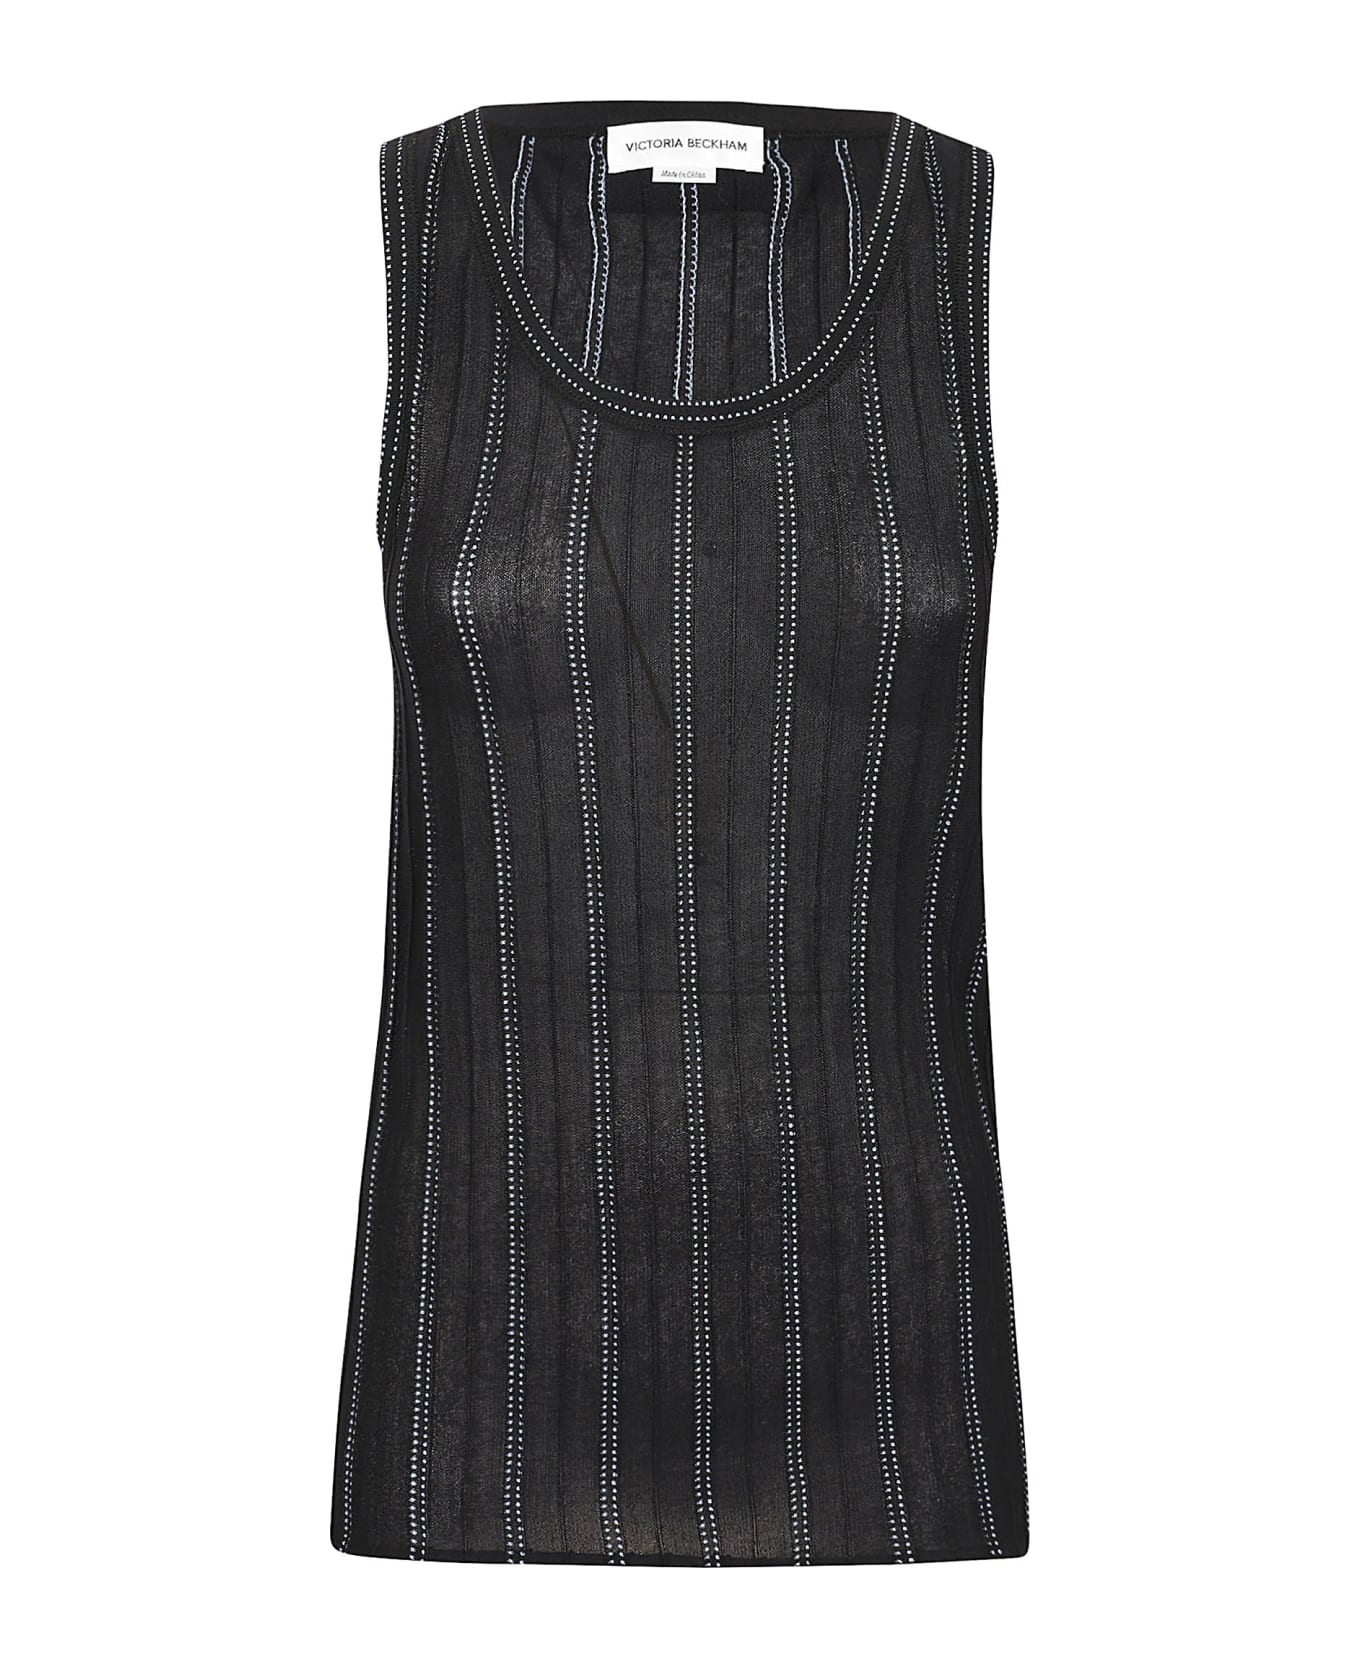 Victoria Beckham Fine Knit Tank - Vertical Stripe Black/blue タンクトップ